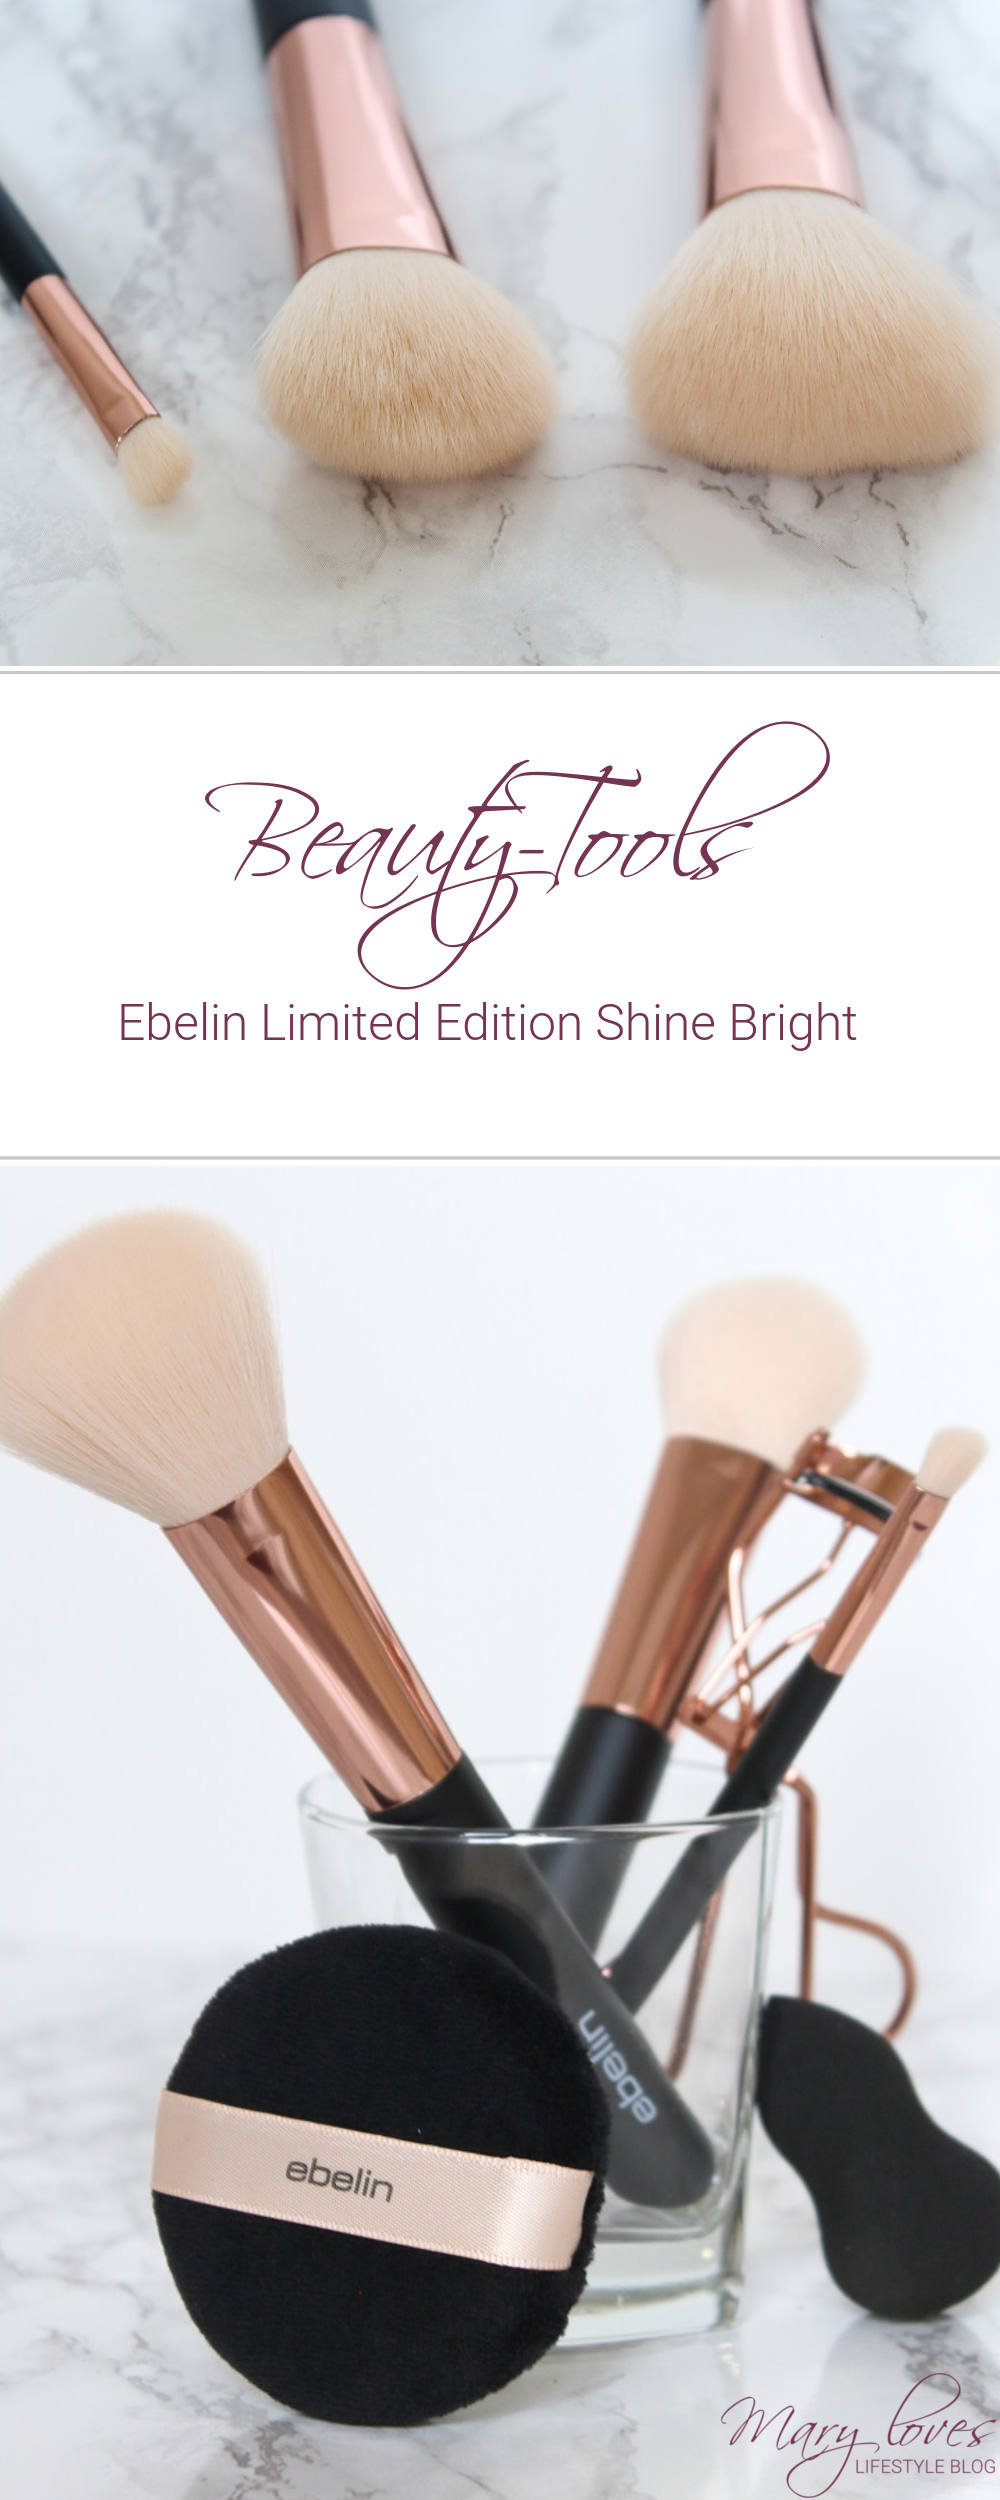 Beauty-Tools - Ebelin Limited Edition Shine Bright